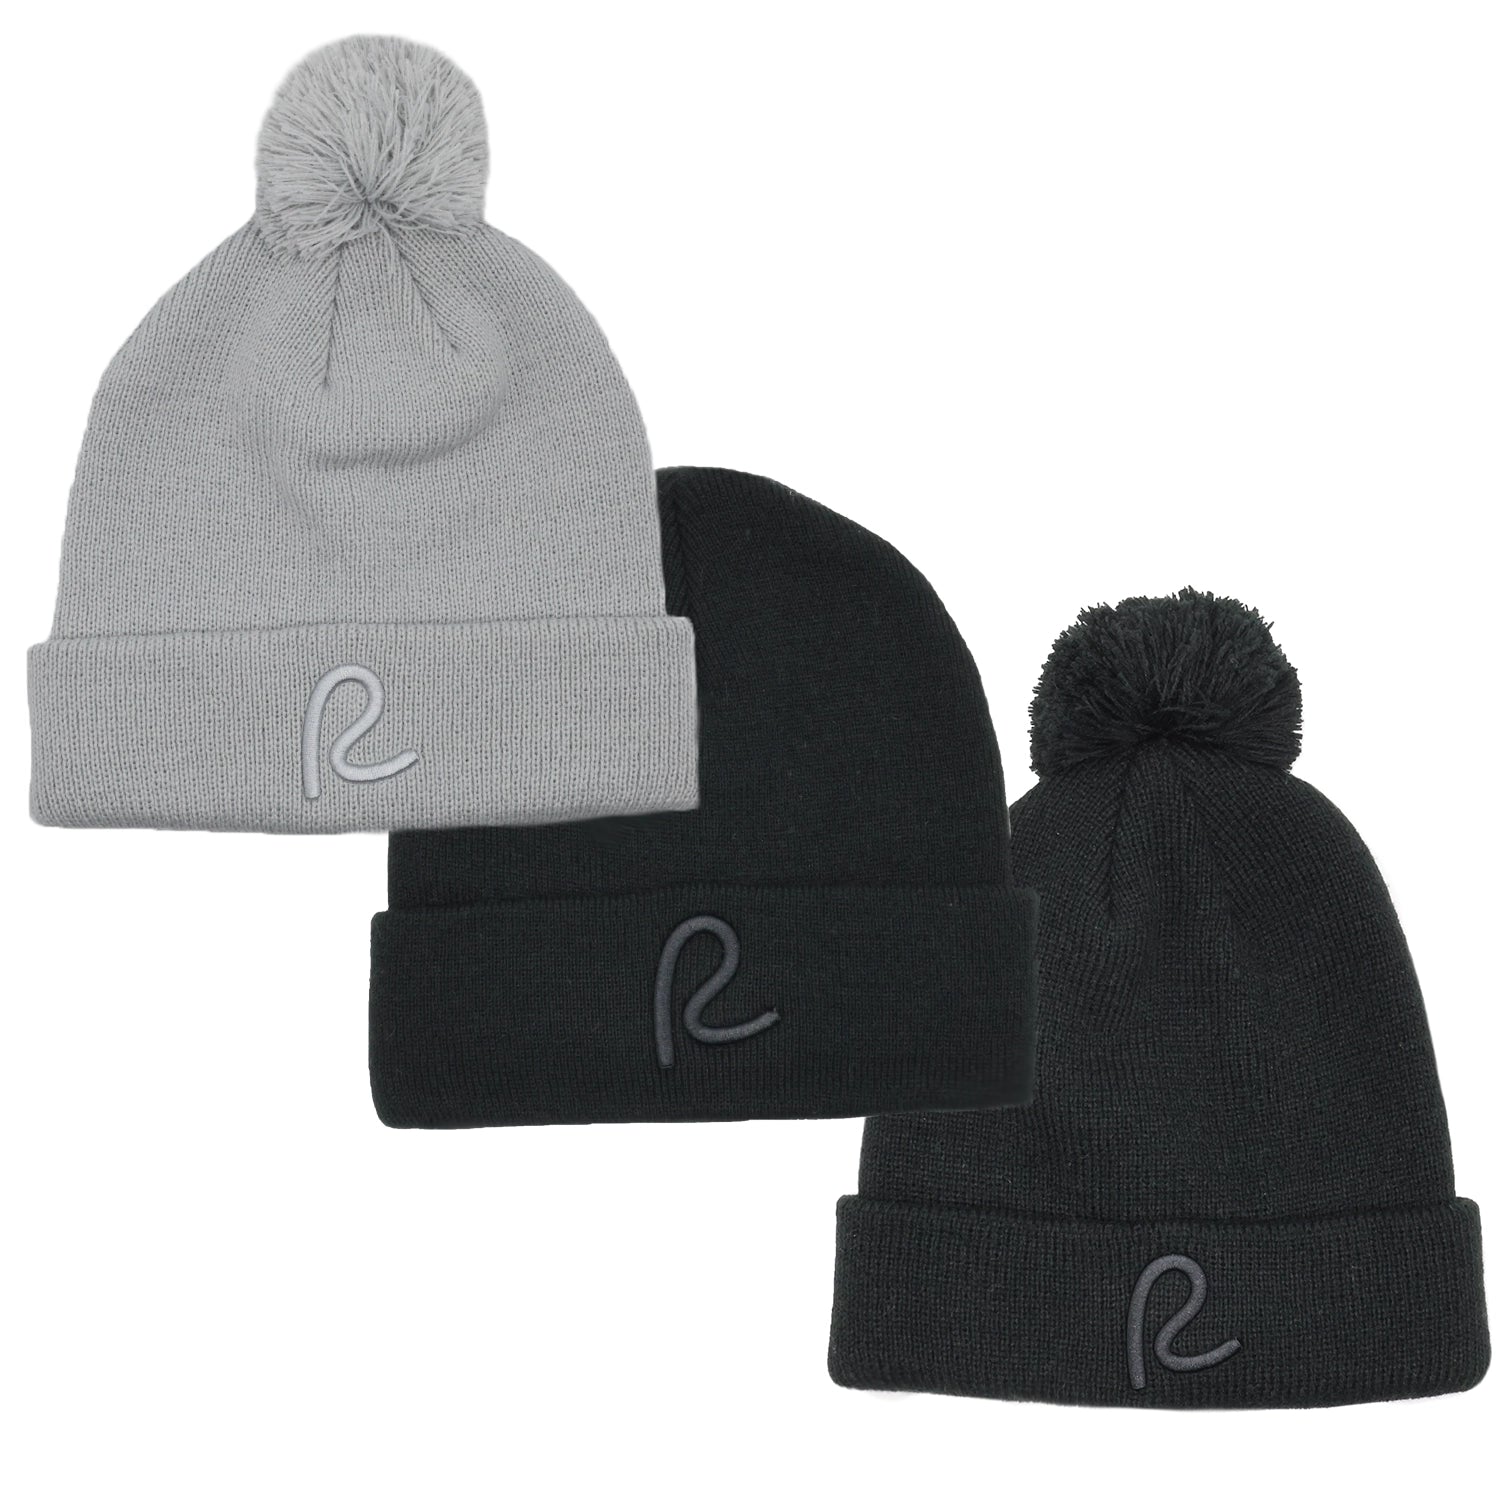 Rewired Winter Hat Triple Pack - Grey/Black/Black